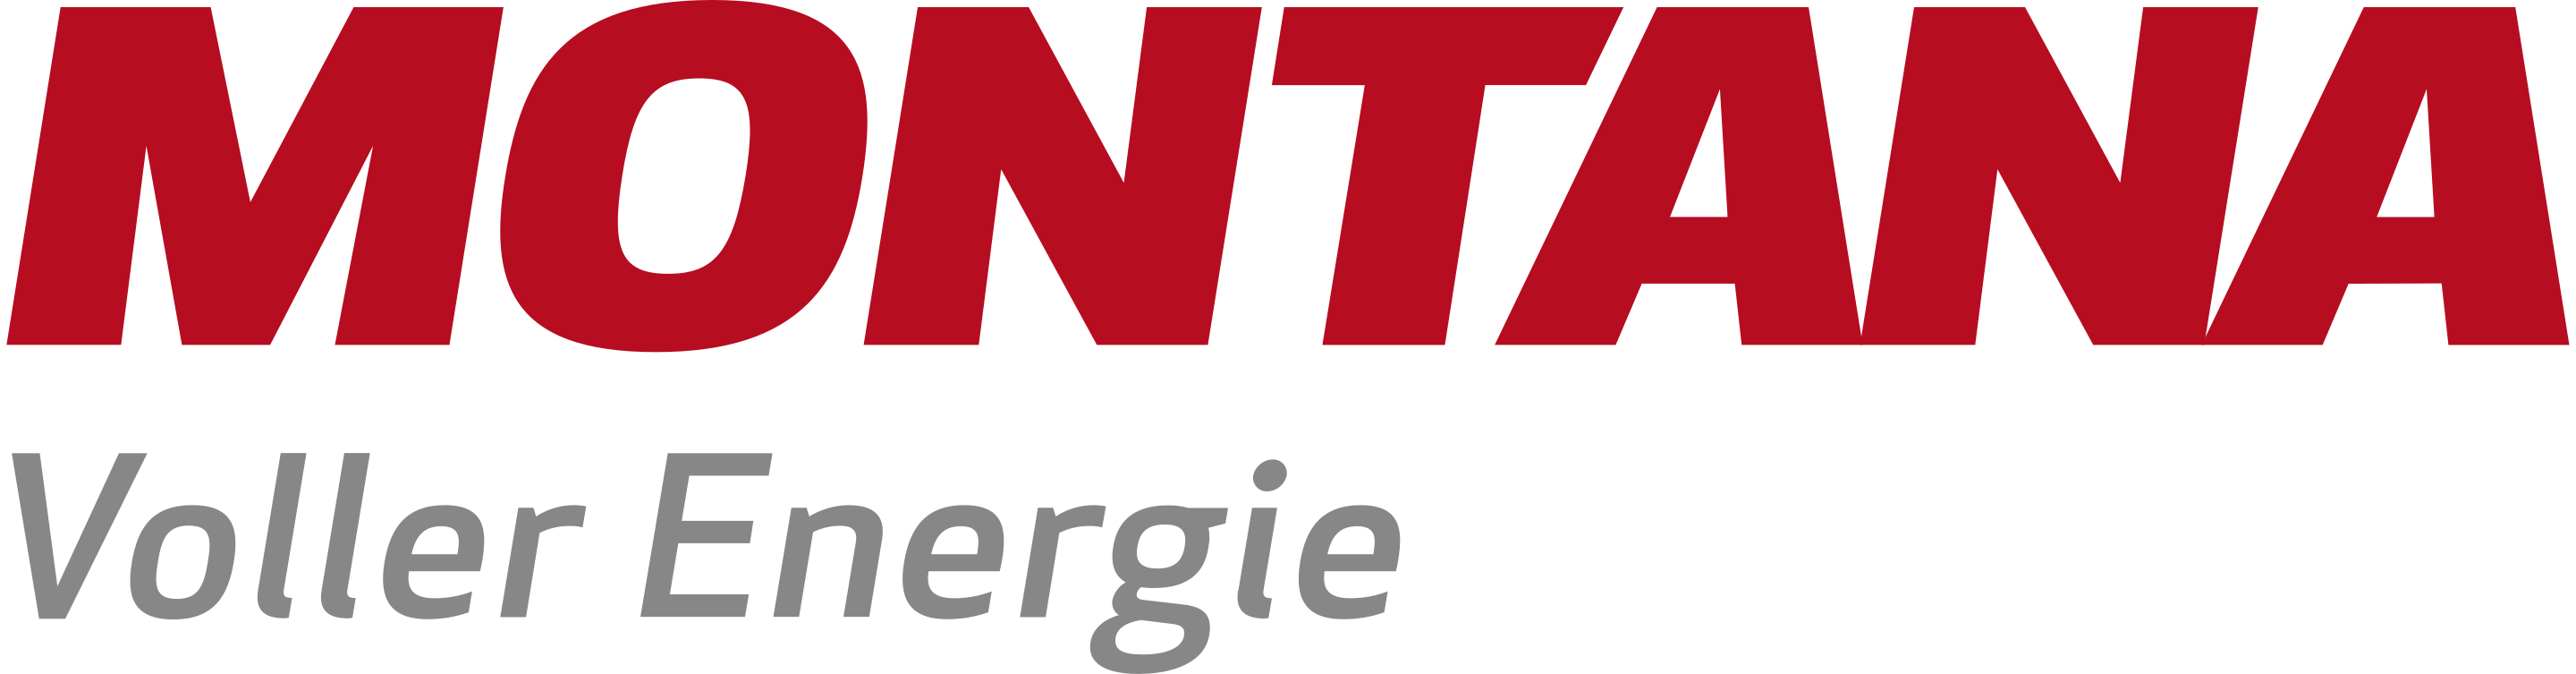 montana-energie-logo